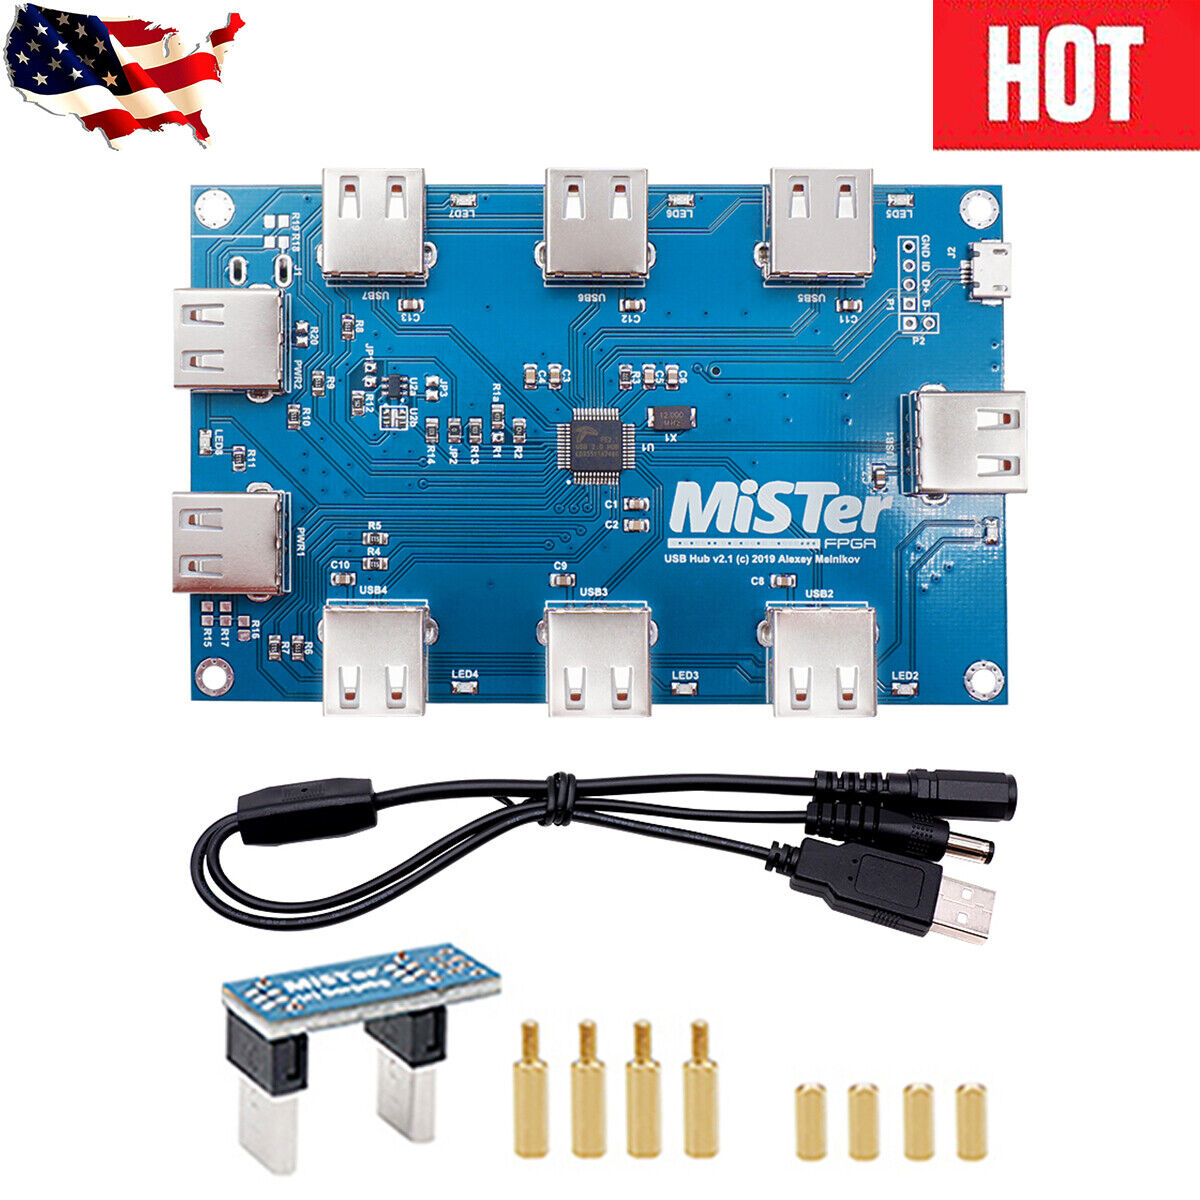 Mister FPGA 7 Port USB HUB V2.1 Kit With Bridge Board Splitter Cable Standoffs